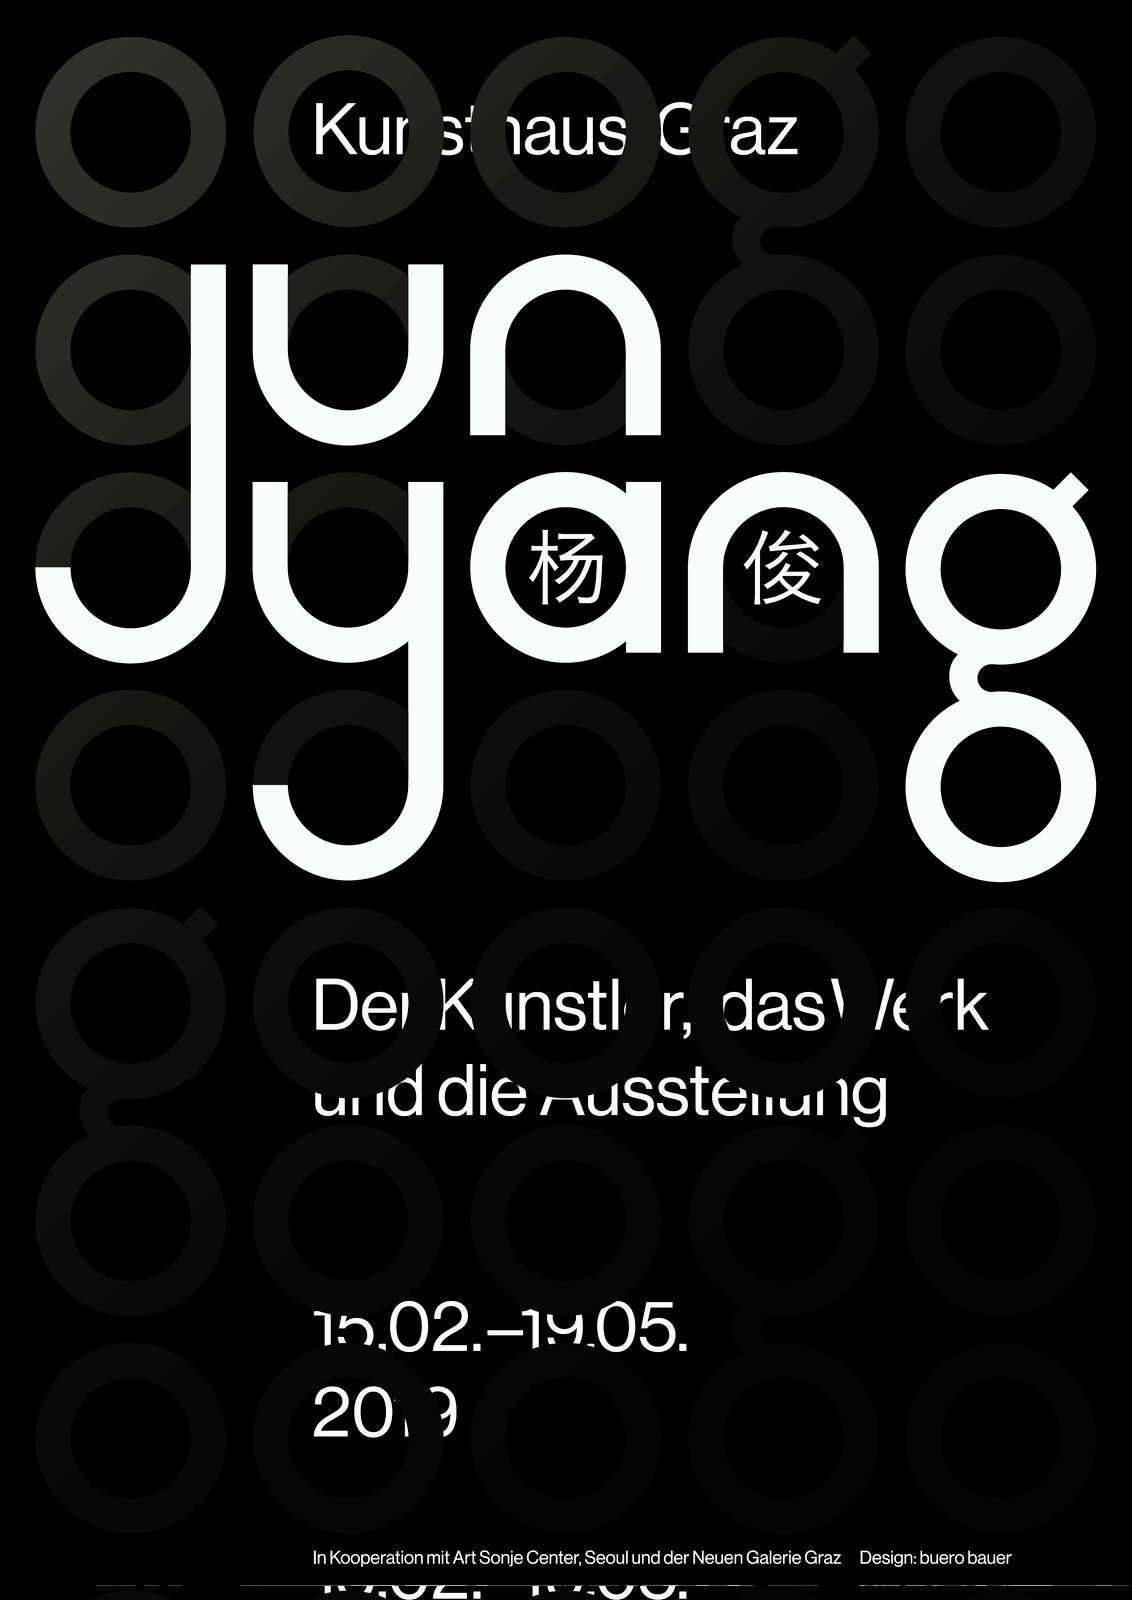 mono to go / Jun Yang Exhibition Poster”, 2019, by buero bauer ...